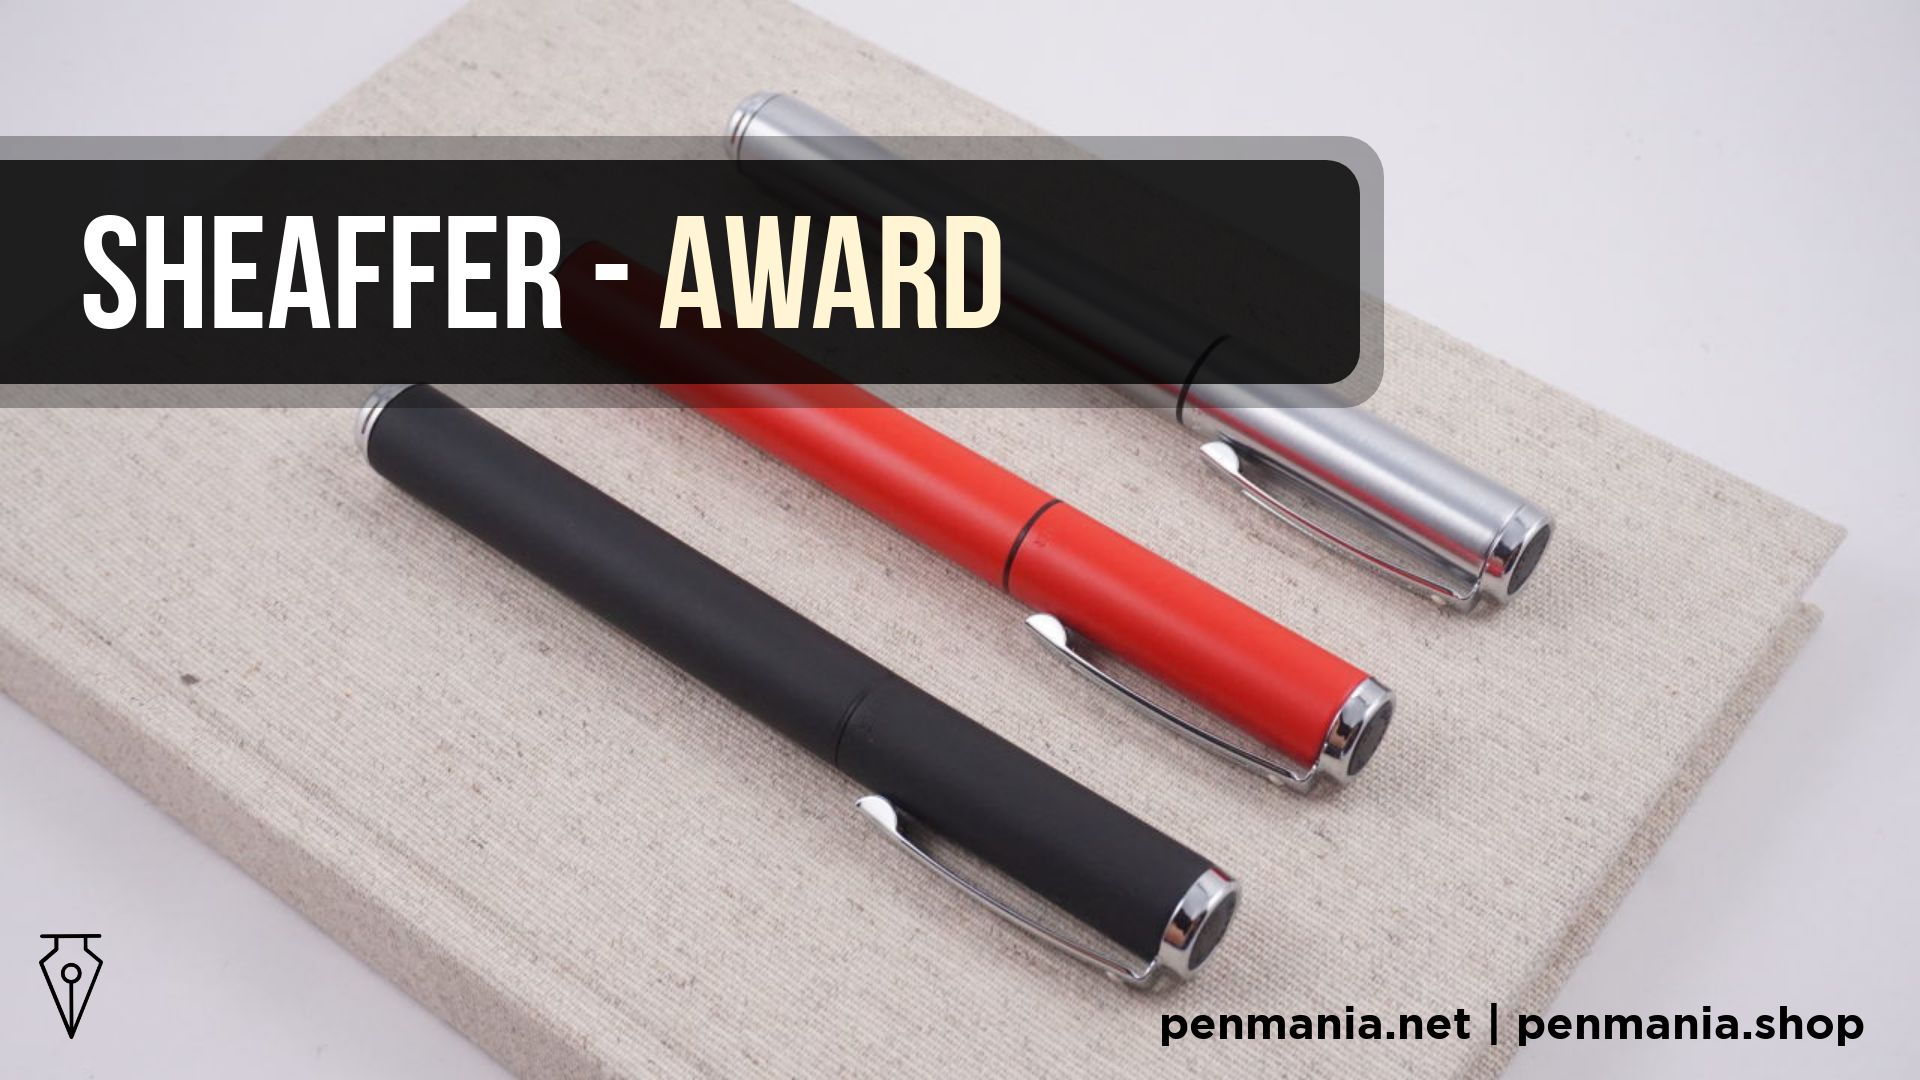 Coperta Video Stilou Sheaffer Award Recenzie Video Penmania Shop